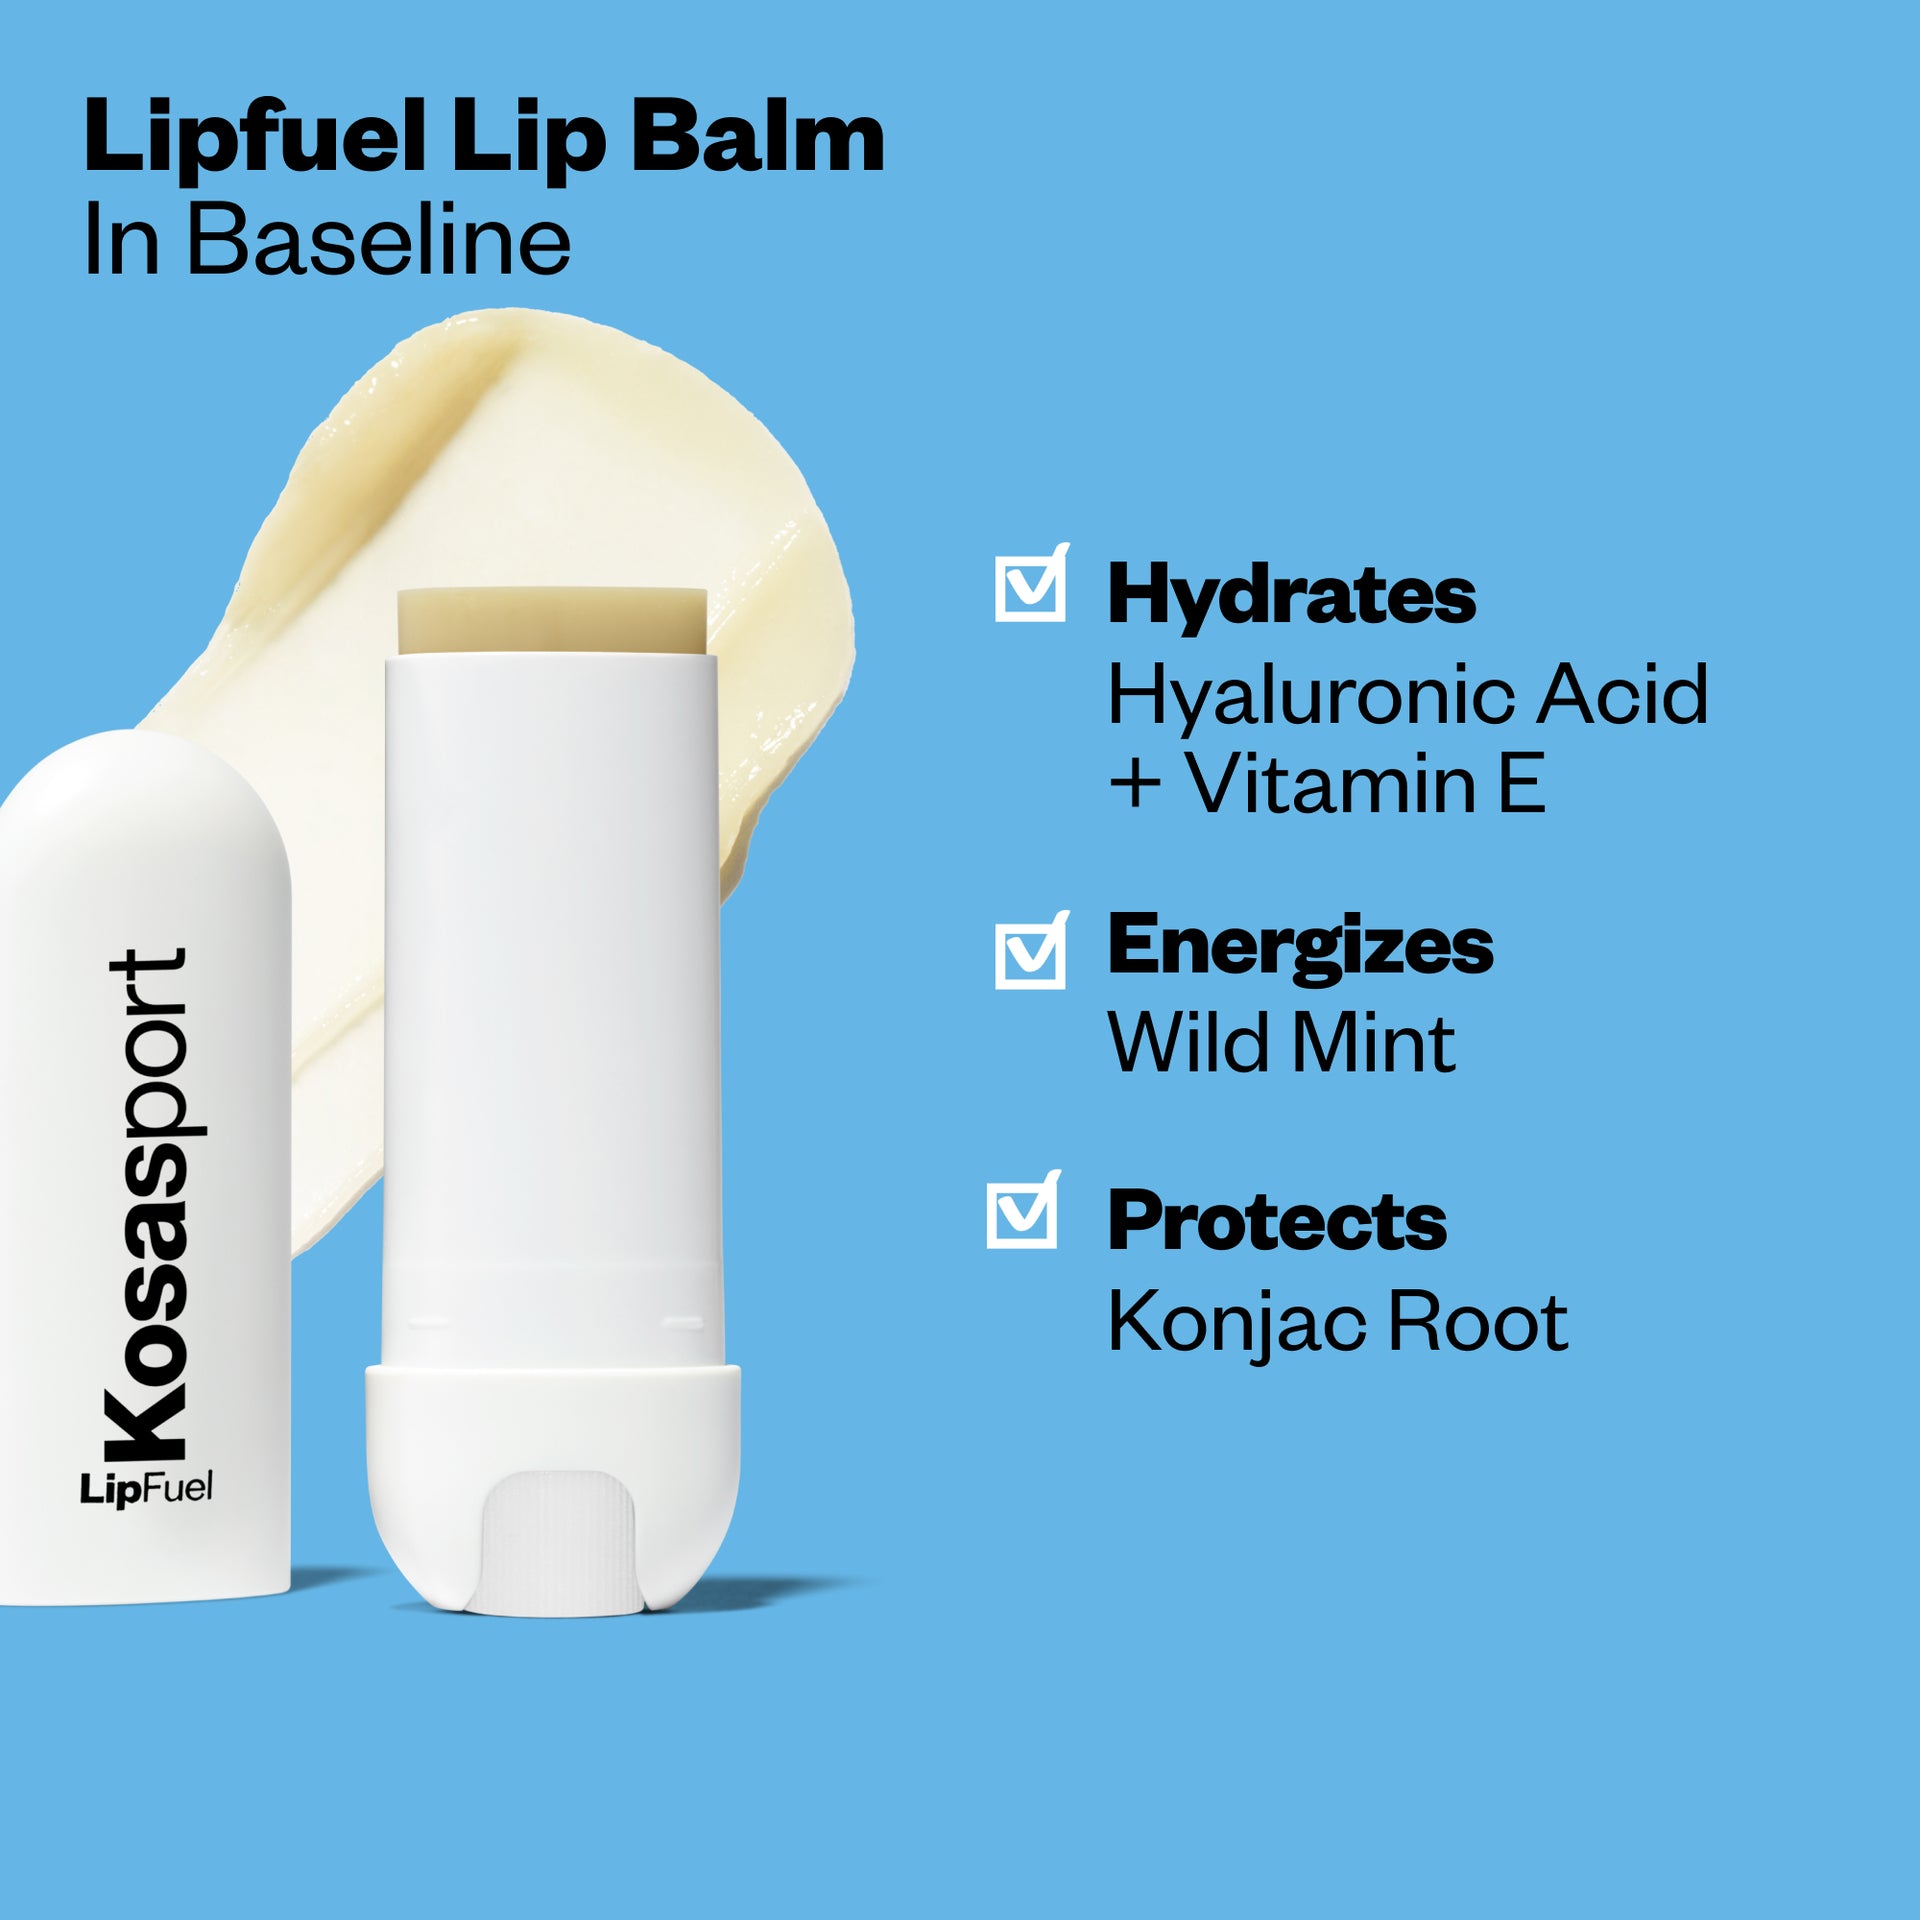 Lipfuel Lip Balm ingredients and benefits